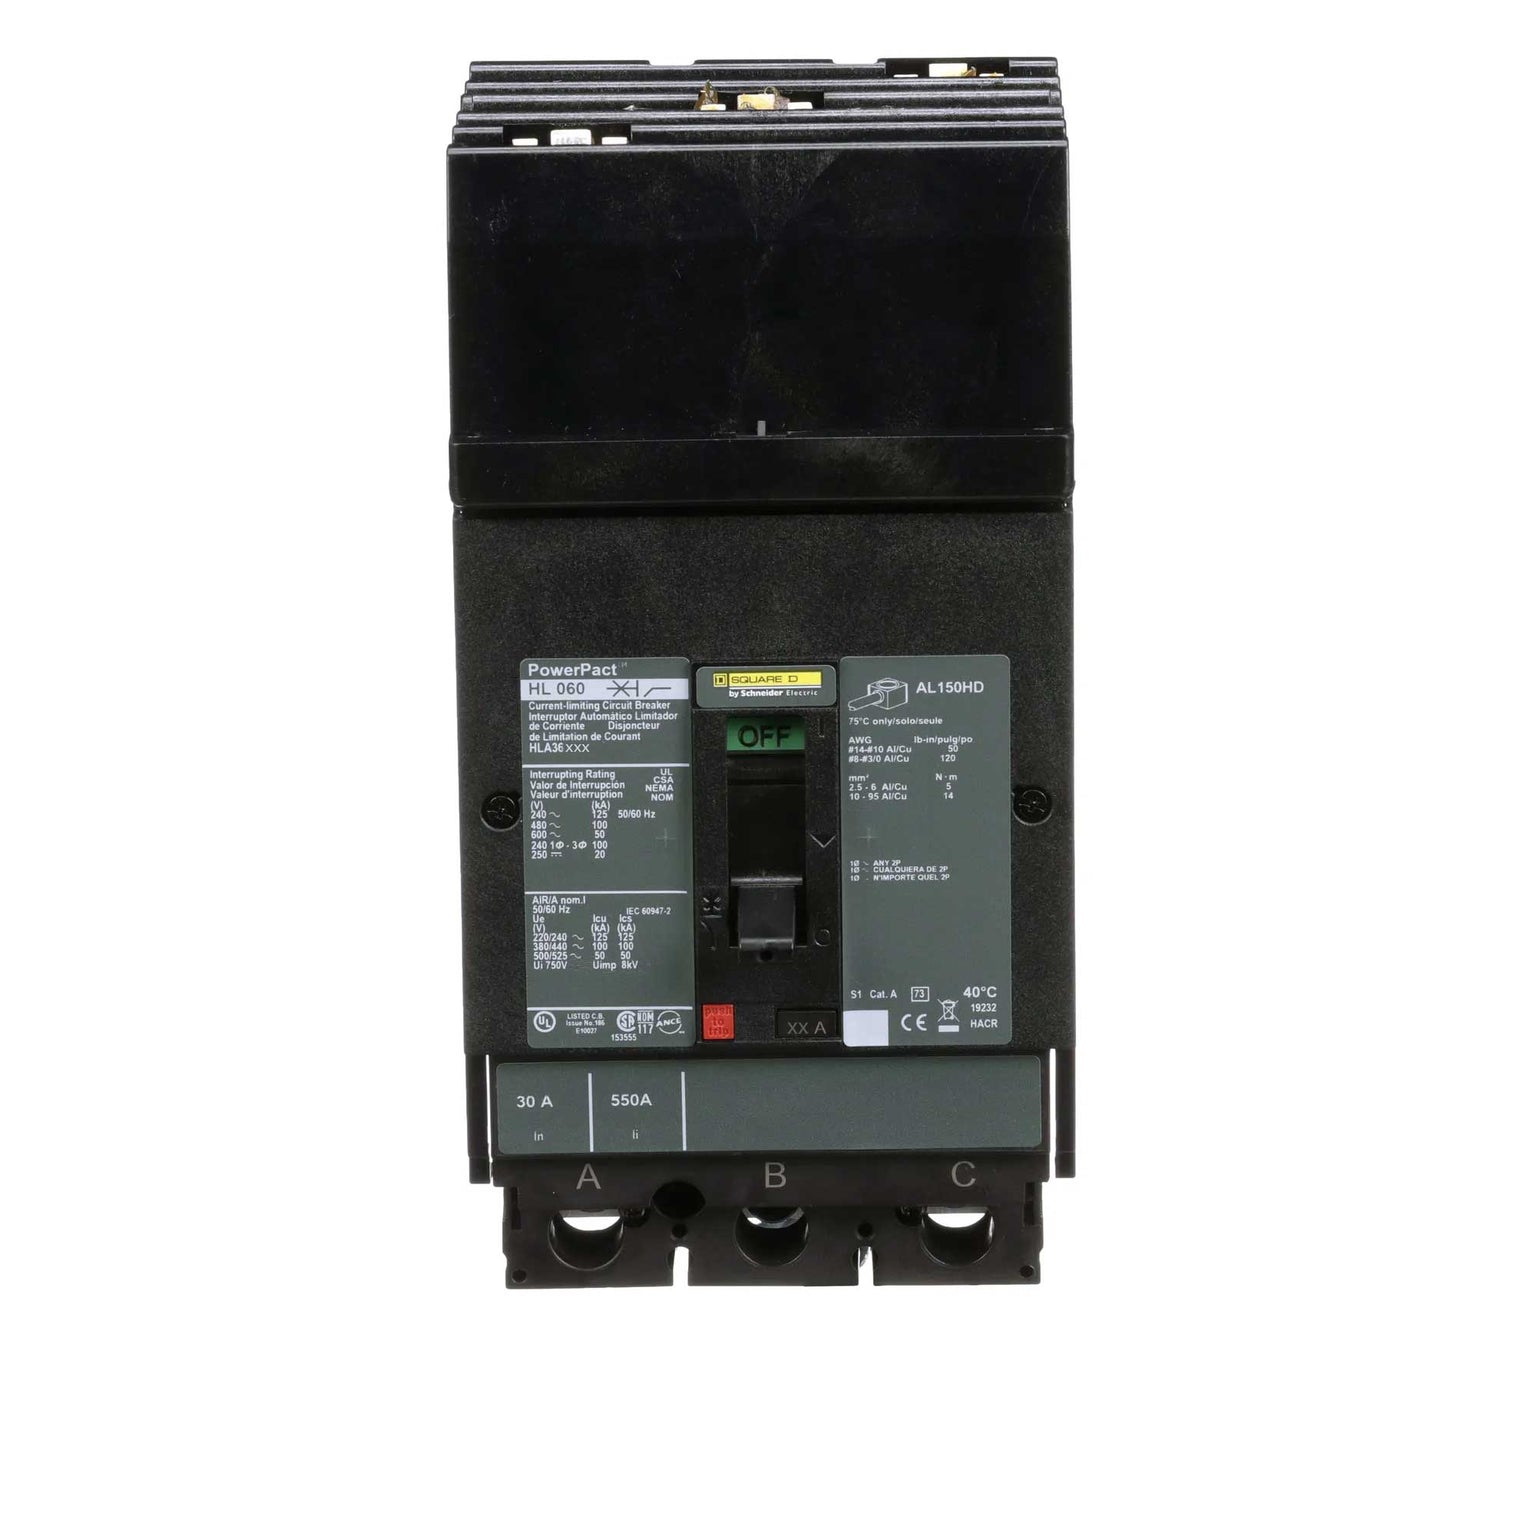 HLA36015 - Square D - Molded Case Circuit Breaker